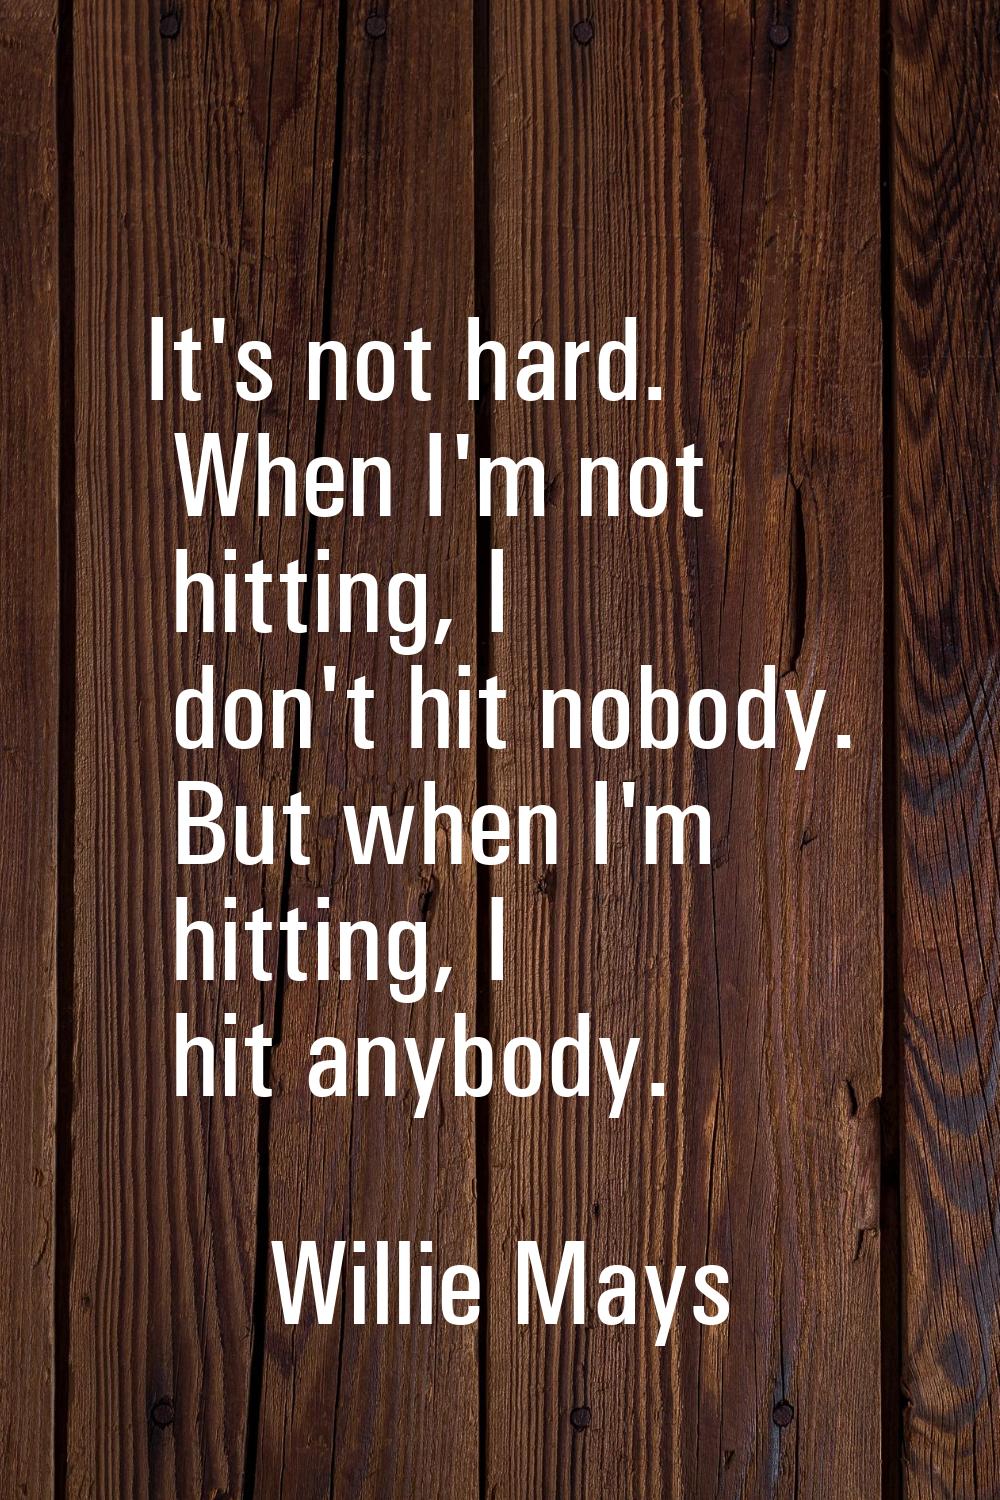 It's not hard. When I'm not hitting, I don't hit nobody. But when I'm hitting, I hit anybody.